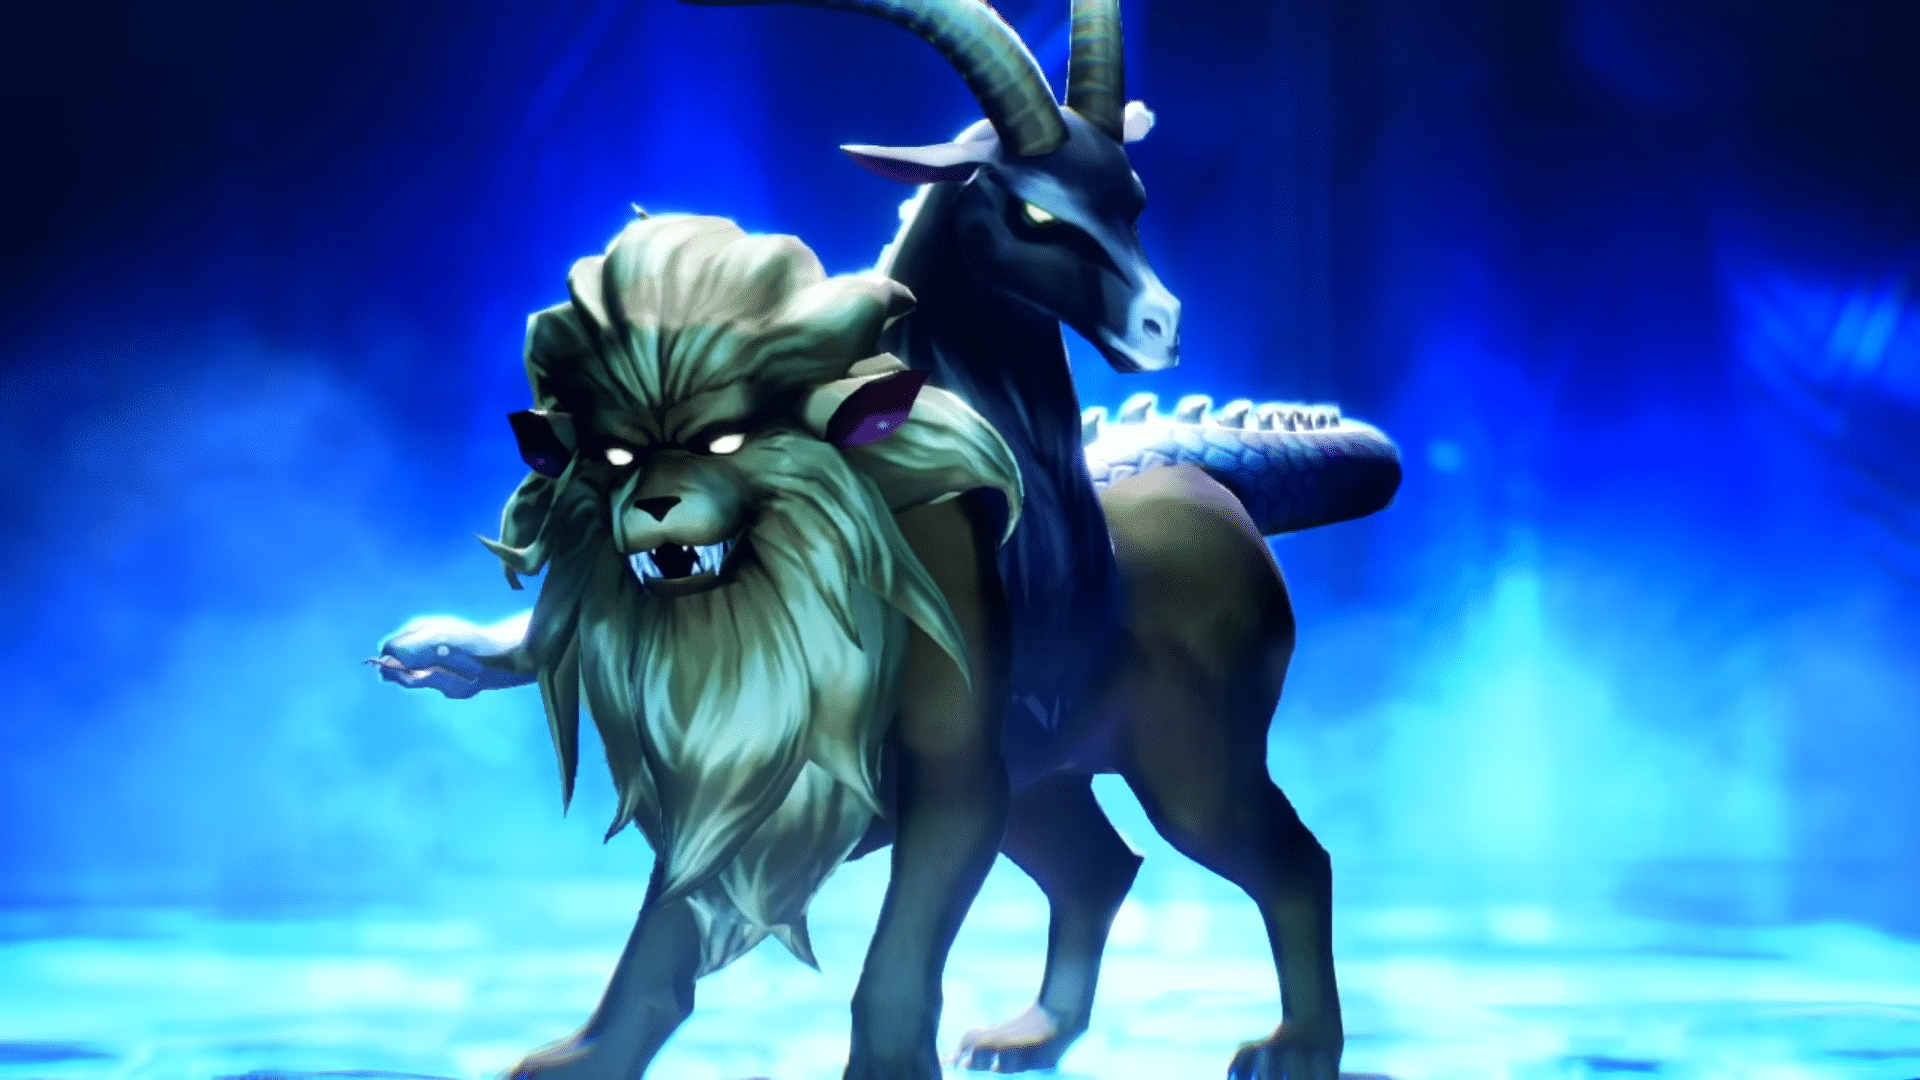 Shin Megami Tensei V Daily Demon Video #194 Showcases Multi-Headed Greek Myth Beast, Chimera